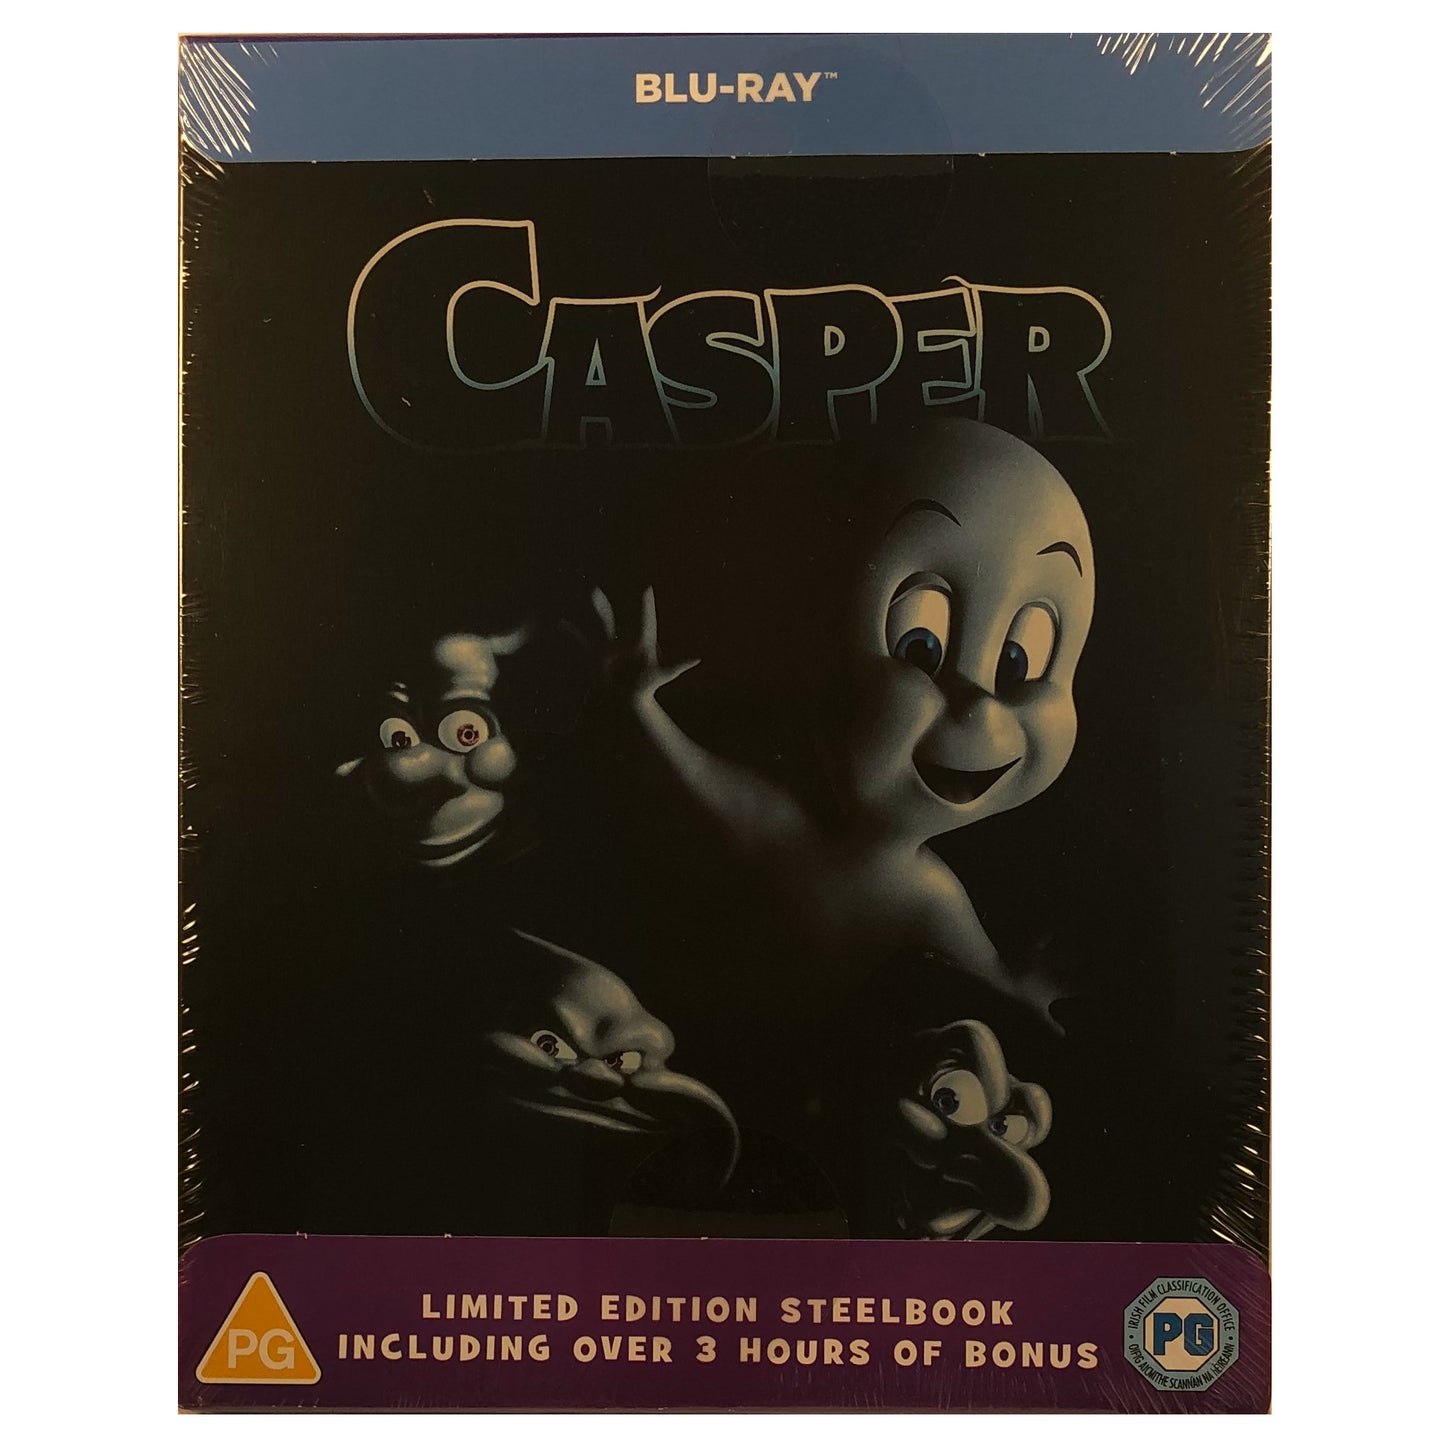 Casper Blu-Ray Steelbook